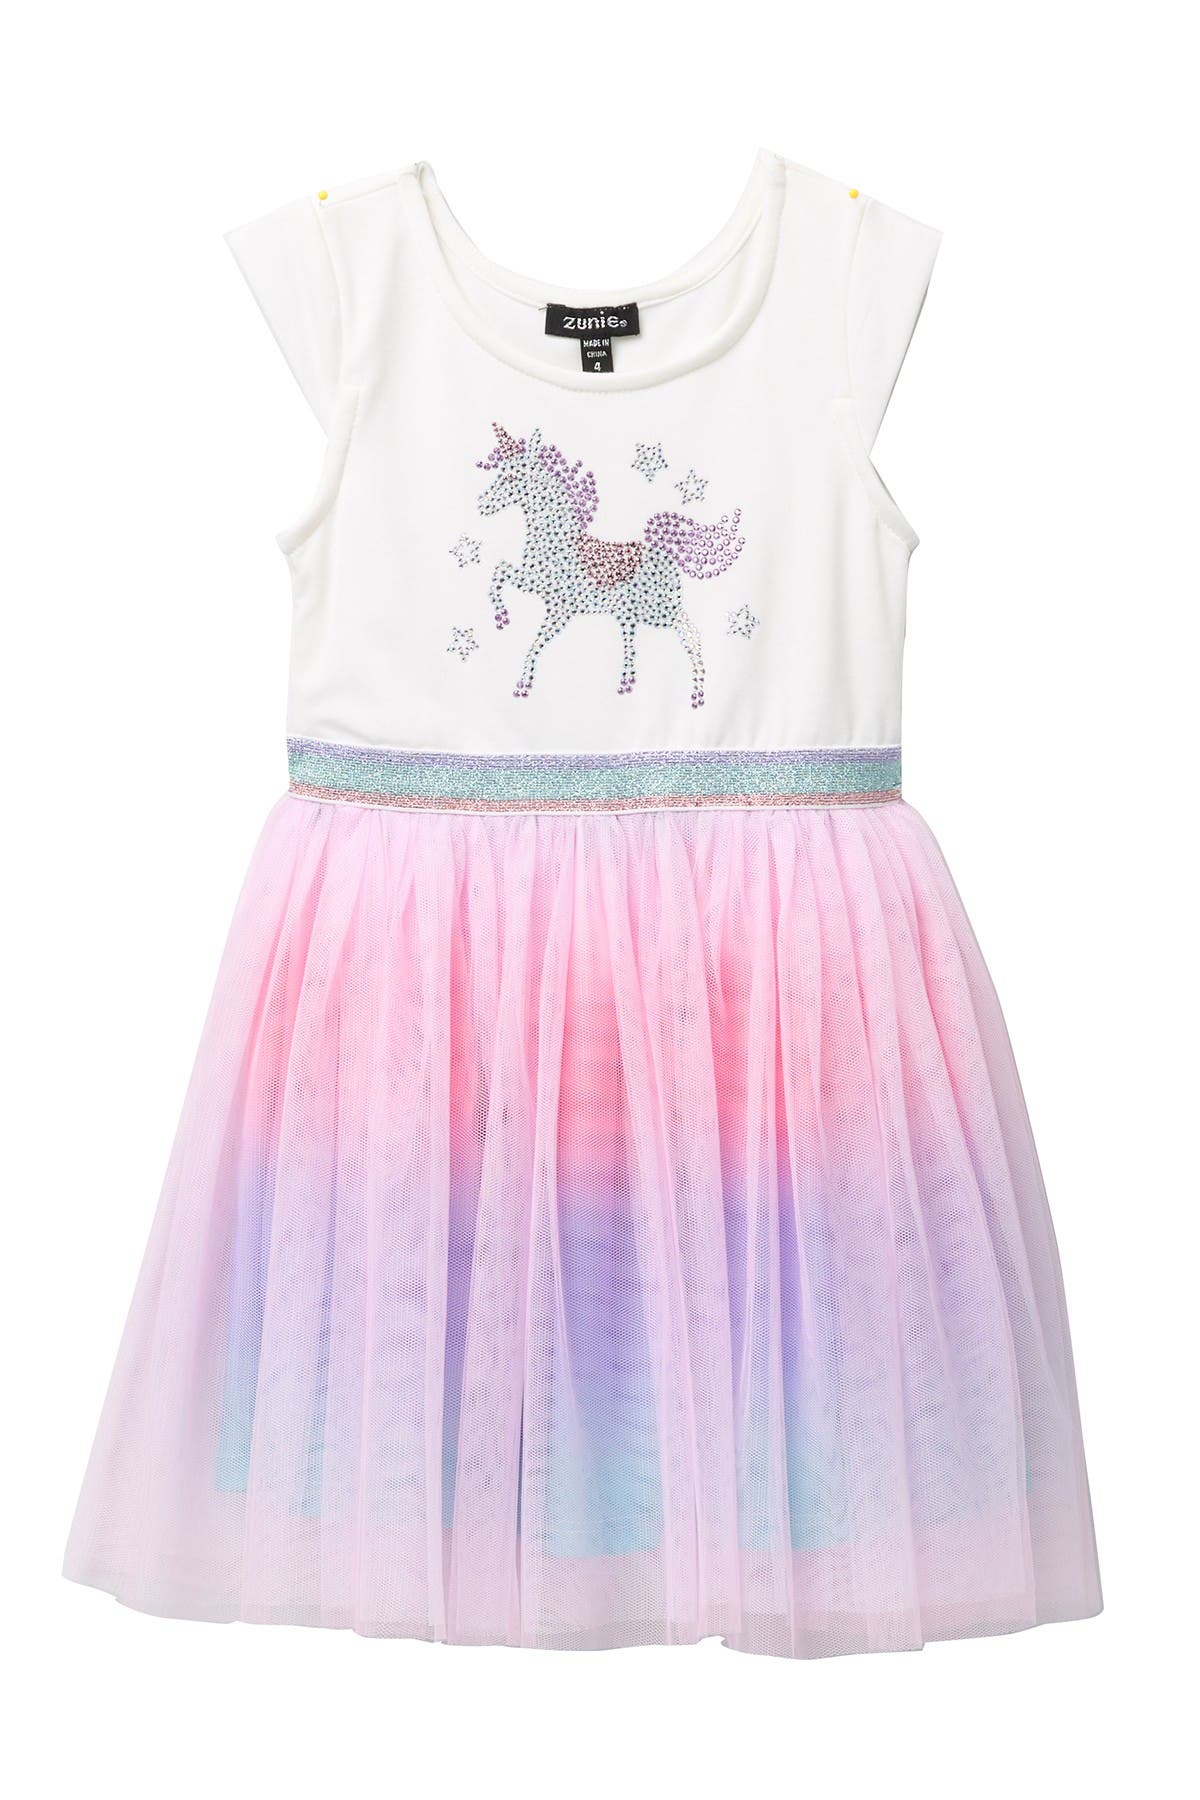 disco una unicorn dress